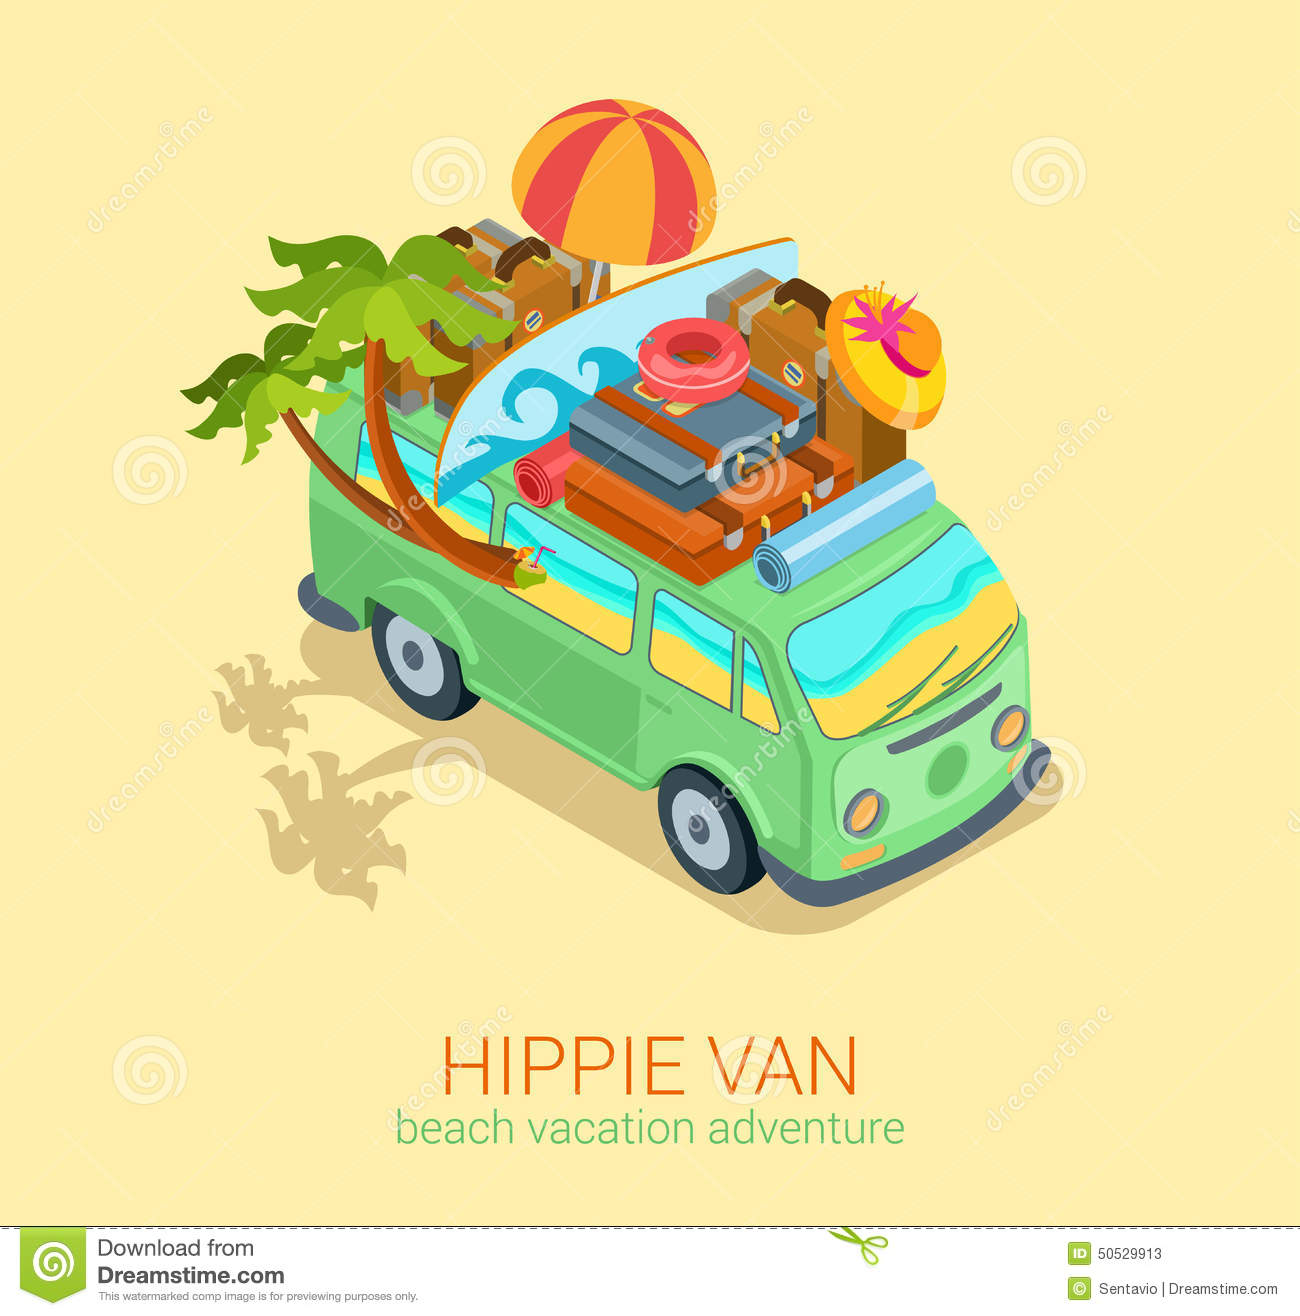 Hippie Van Travel Beach Adventure Vacation Flat 3d Web Isometric Stock